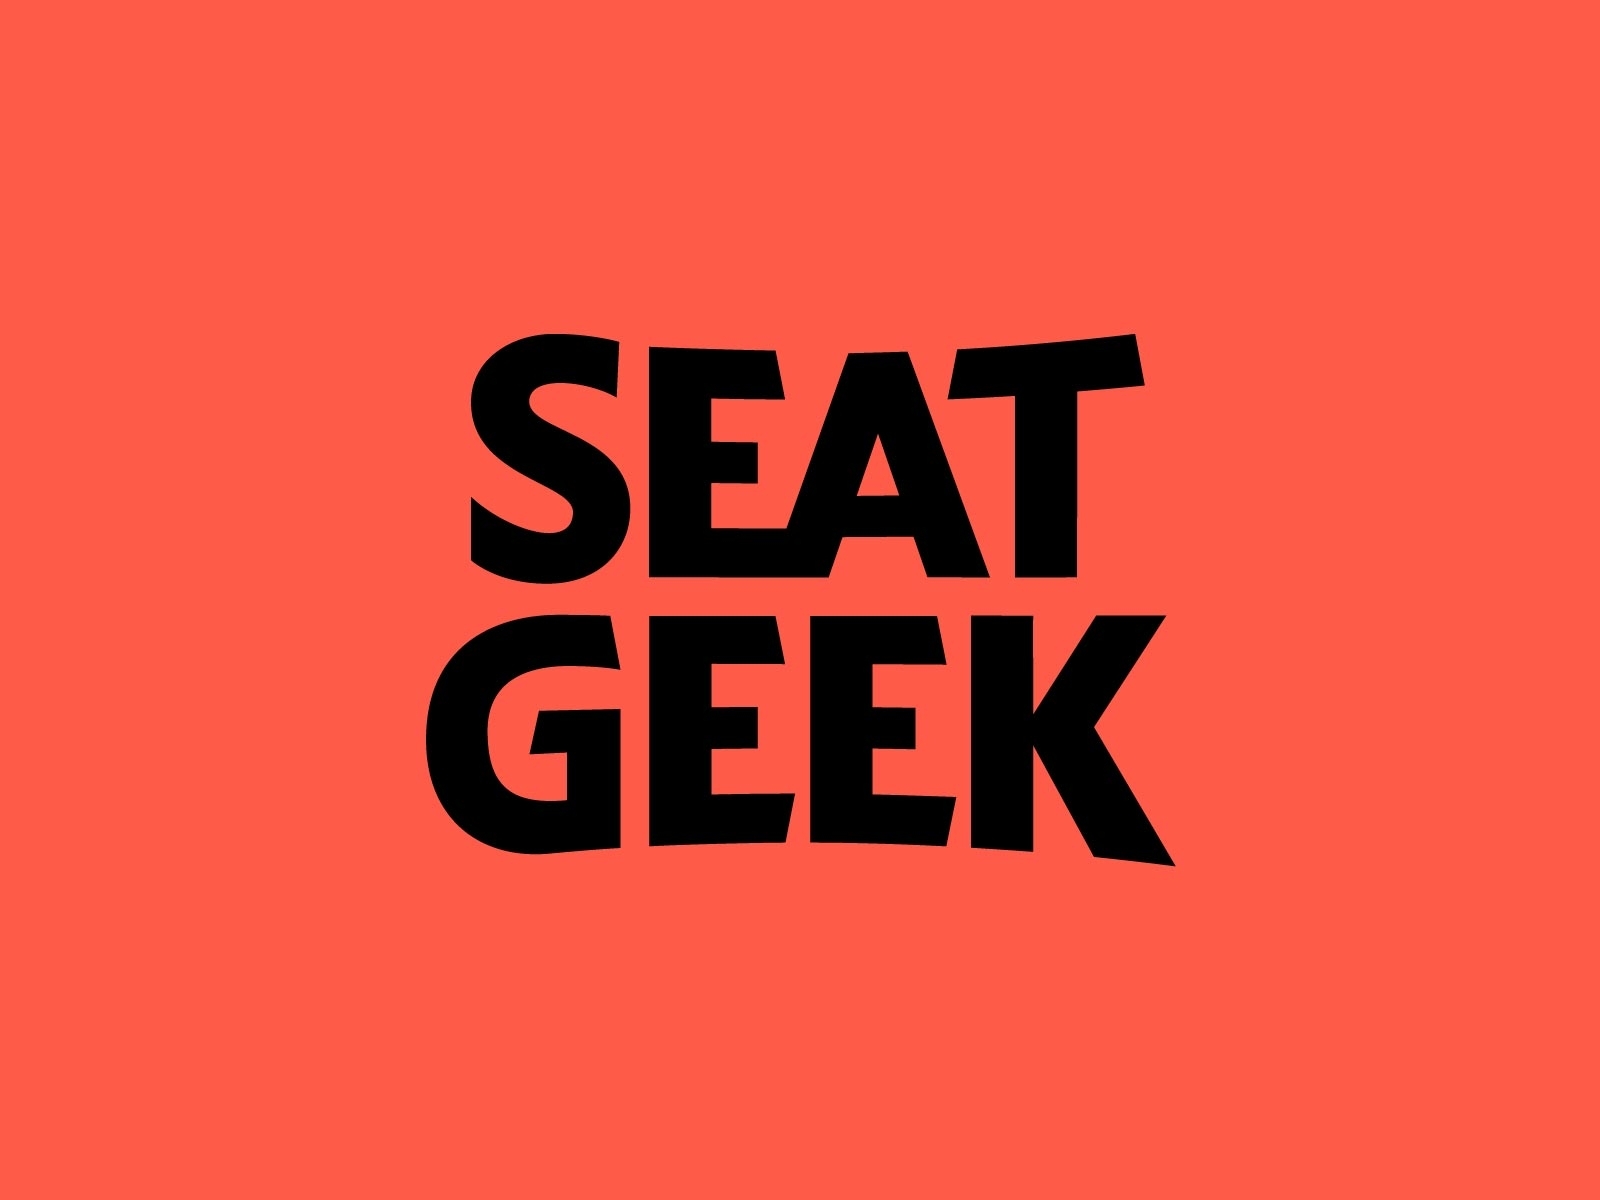 SeatGeek Logo Redesign by Jennifer Hood for Hoodzpah on Dribbble